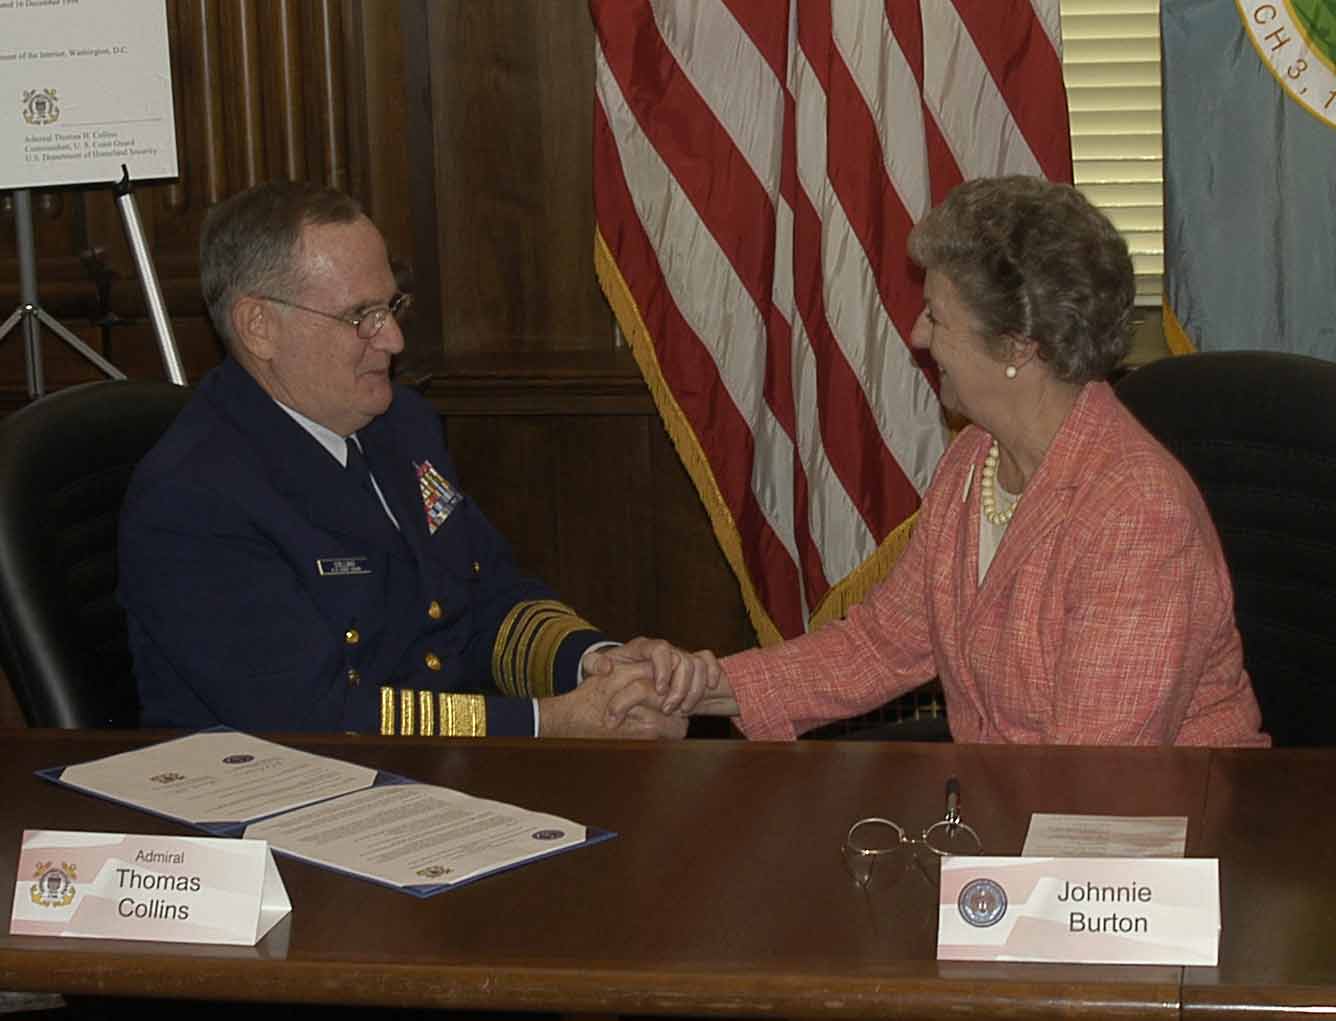 US Coast Guard Adm. Thomas Collins and MMS Director Johnnie Burton